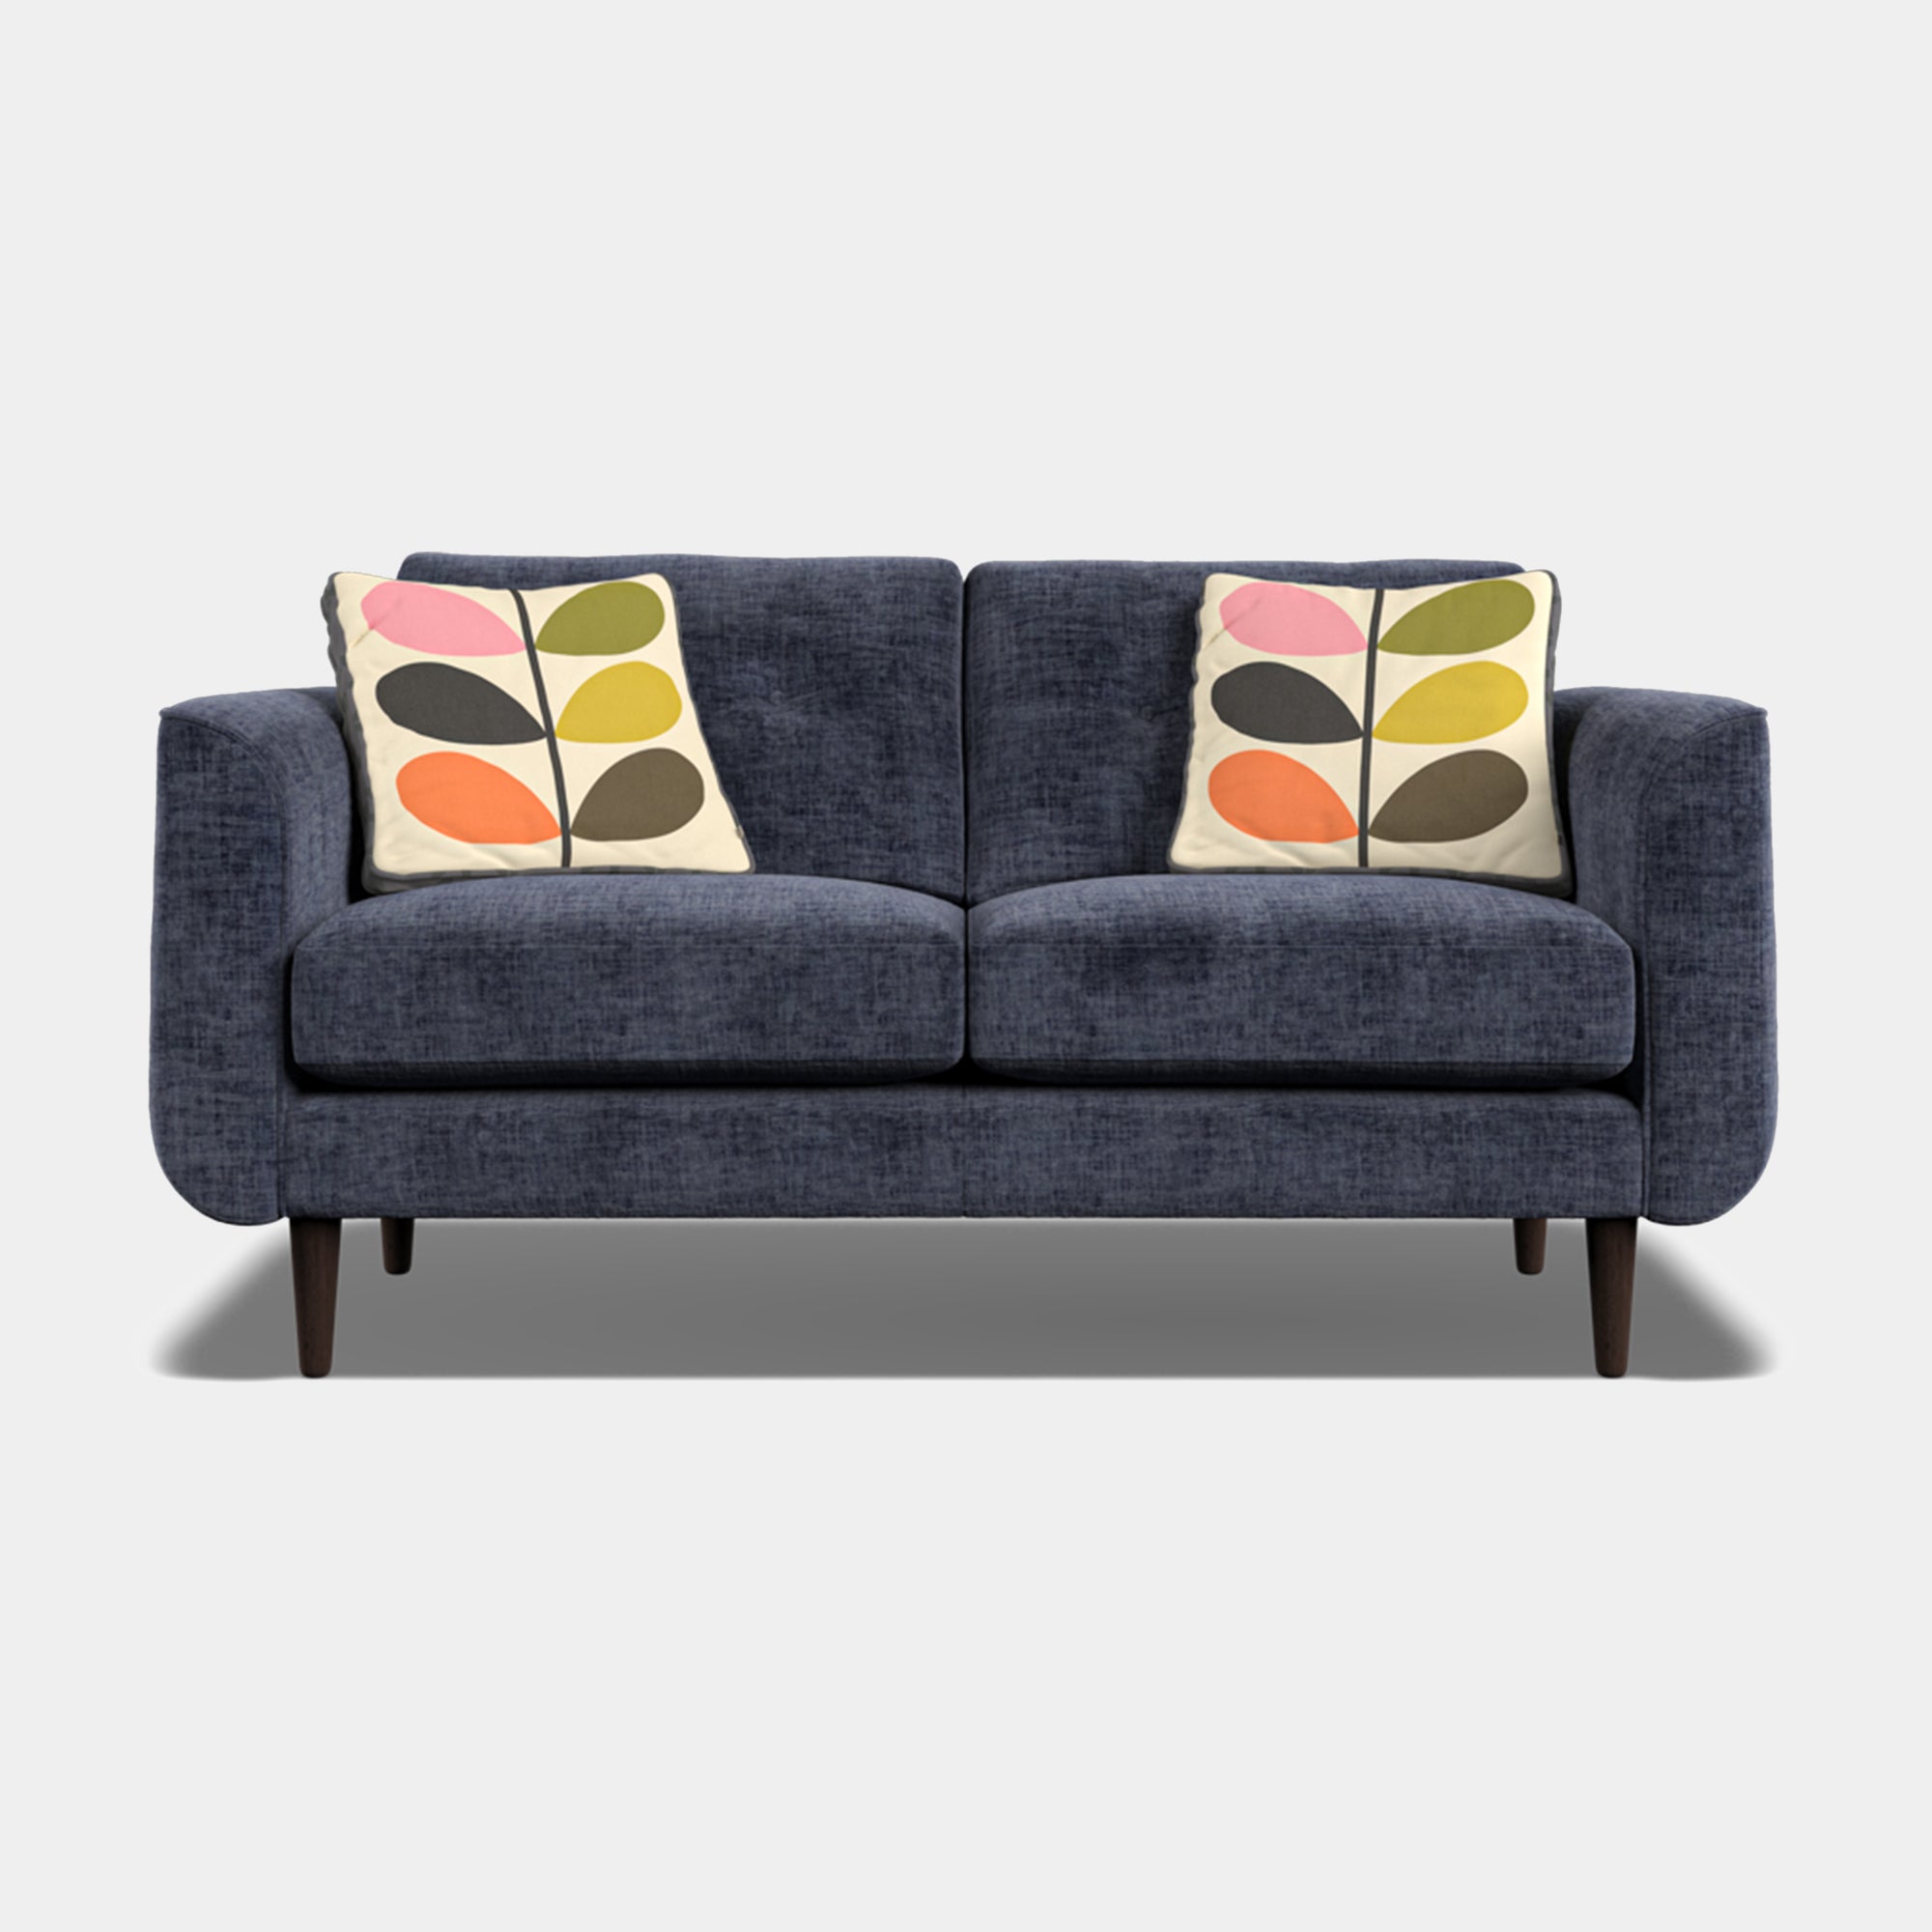 Orla Kiely Linden - Small Sofa In Fabric Grade